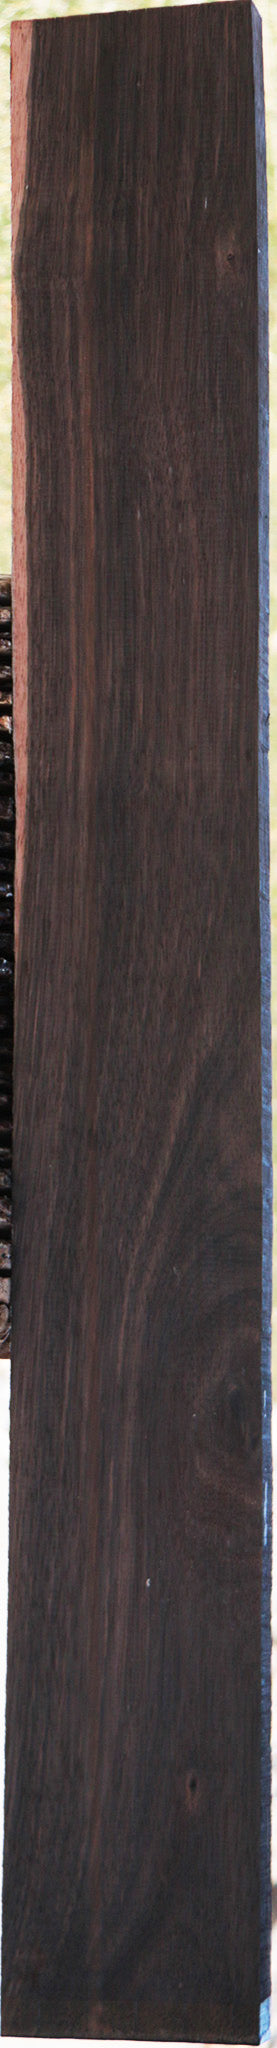 Amara Ebony Lumber